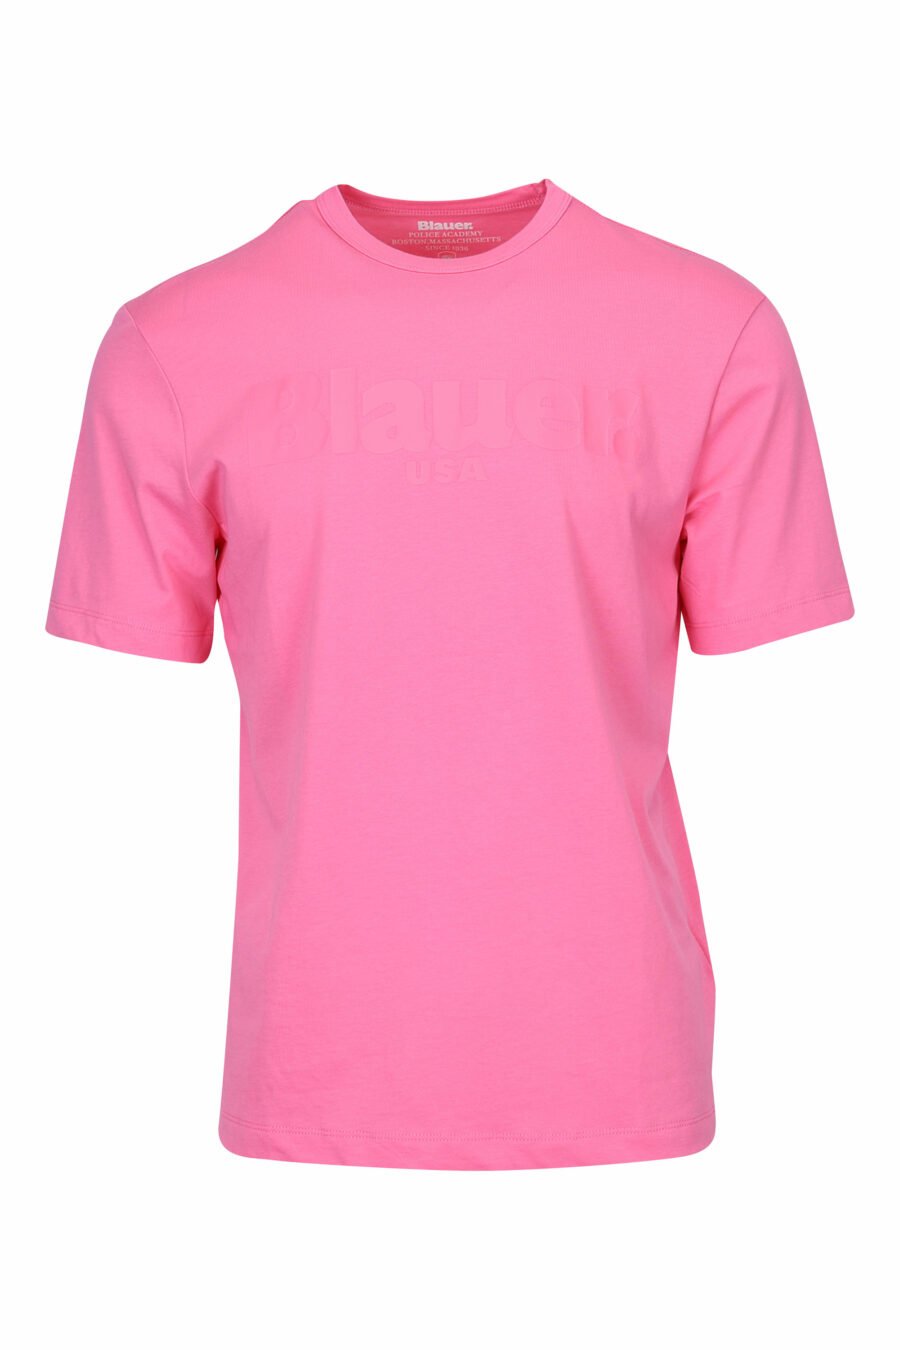 T-shirt cor-de-rosa com logótipo maxi monocromático no centro - 8058610799205